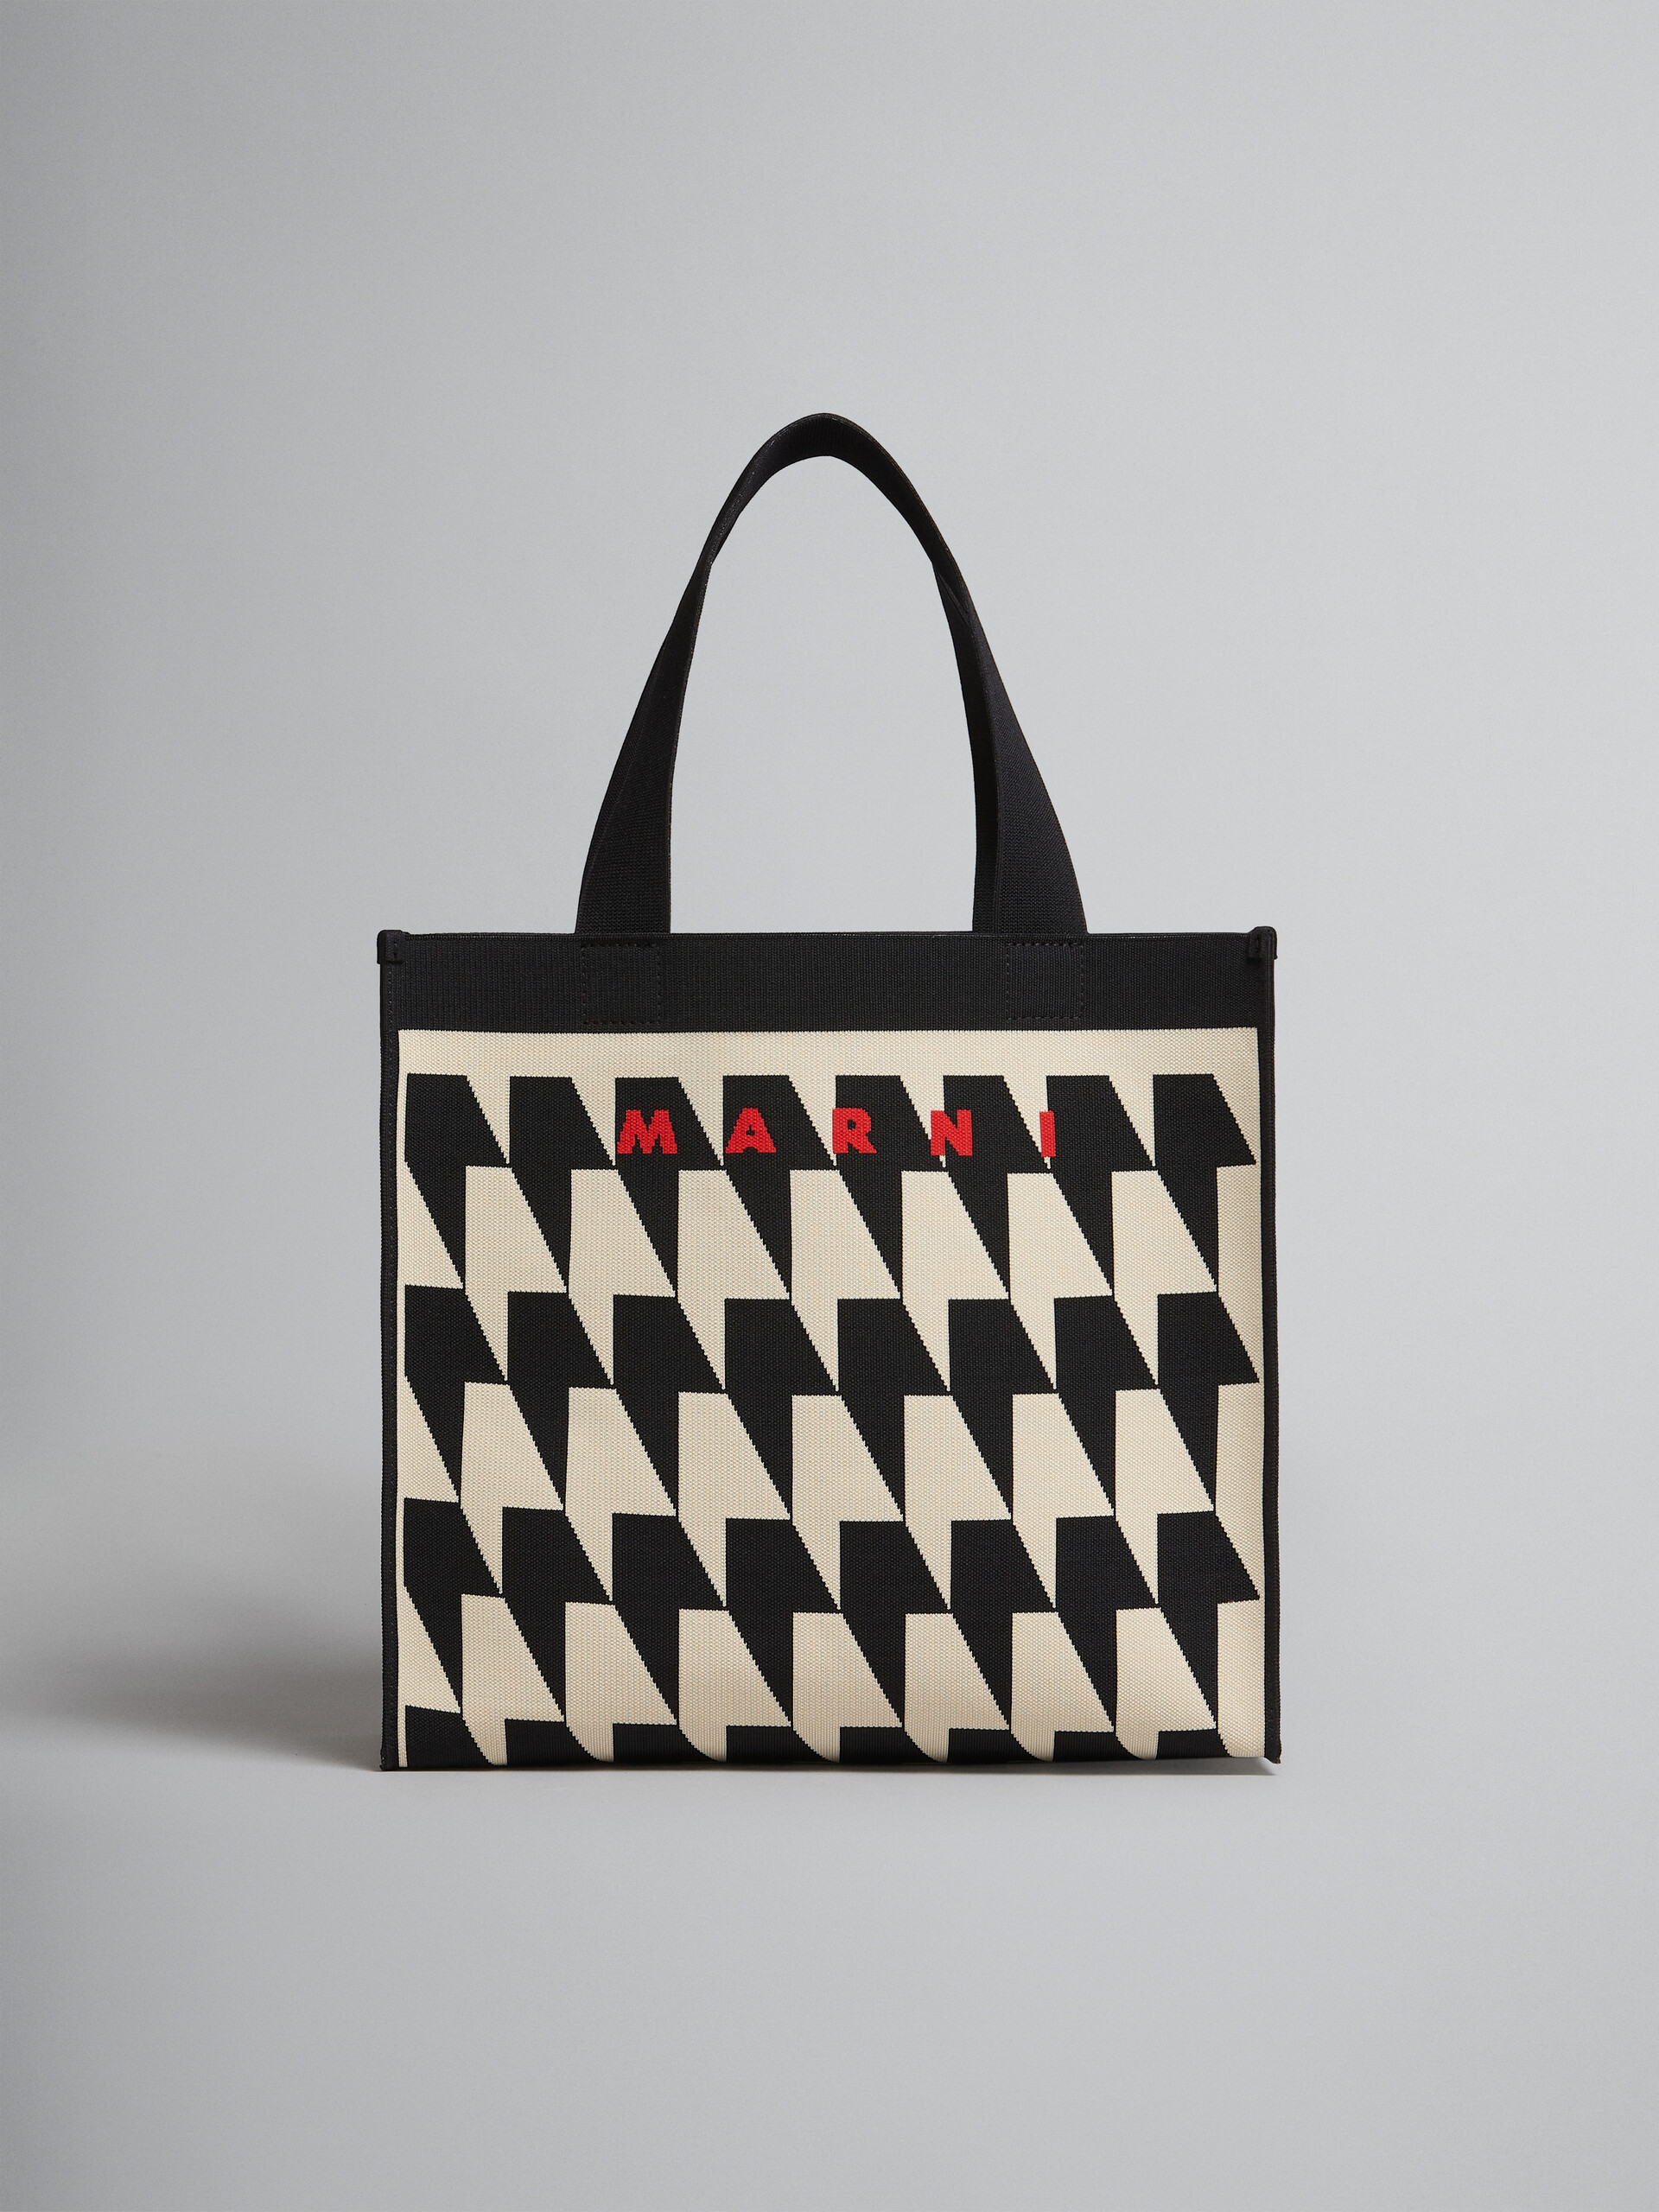 Shopping Bag Jacquard in maglia Pied-de-Poule - Borse shopping - Image 1